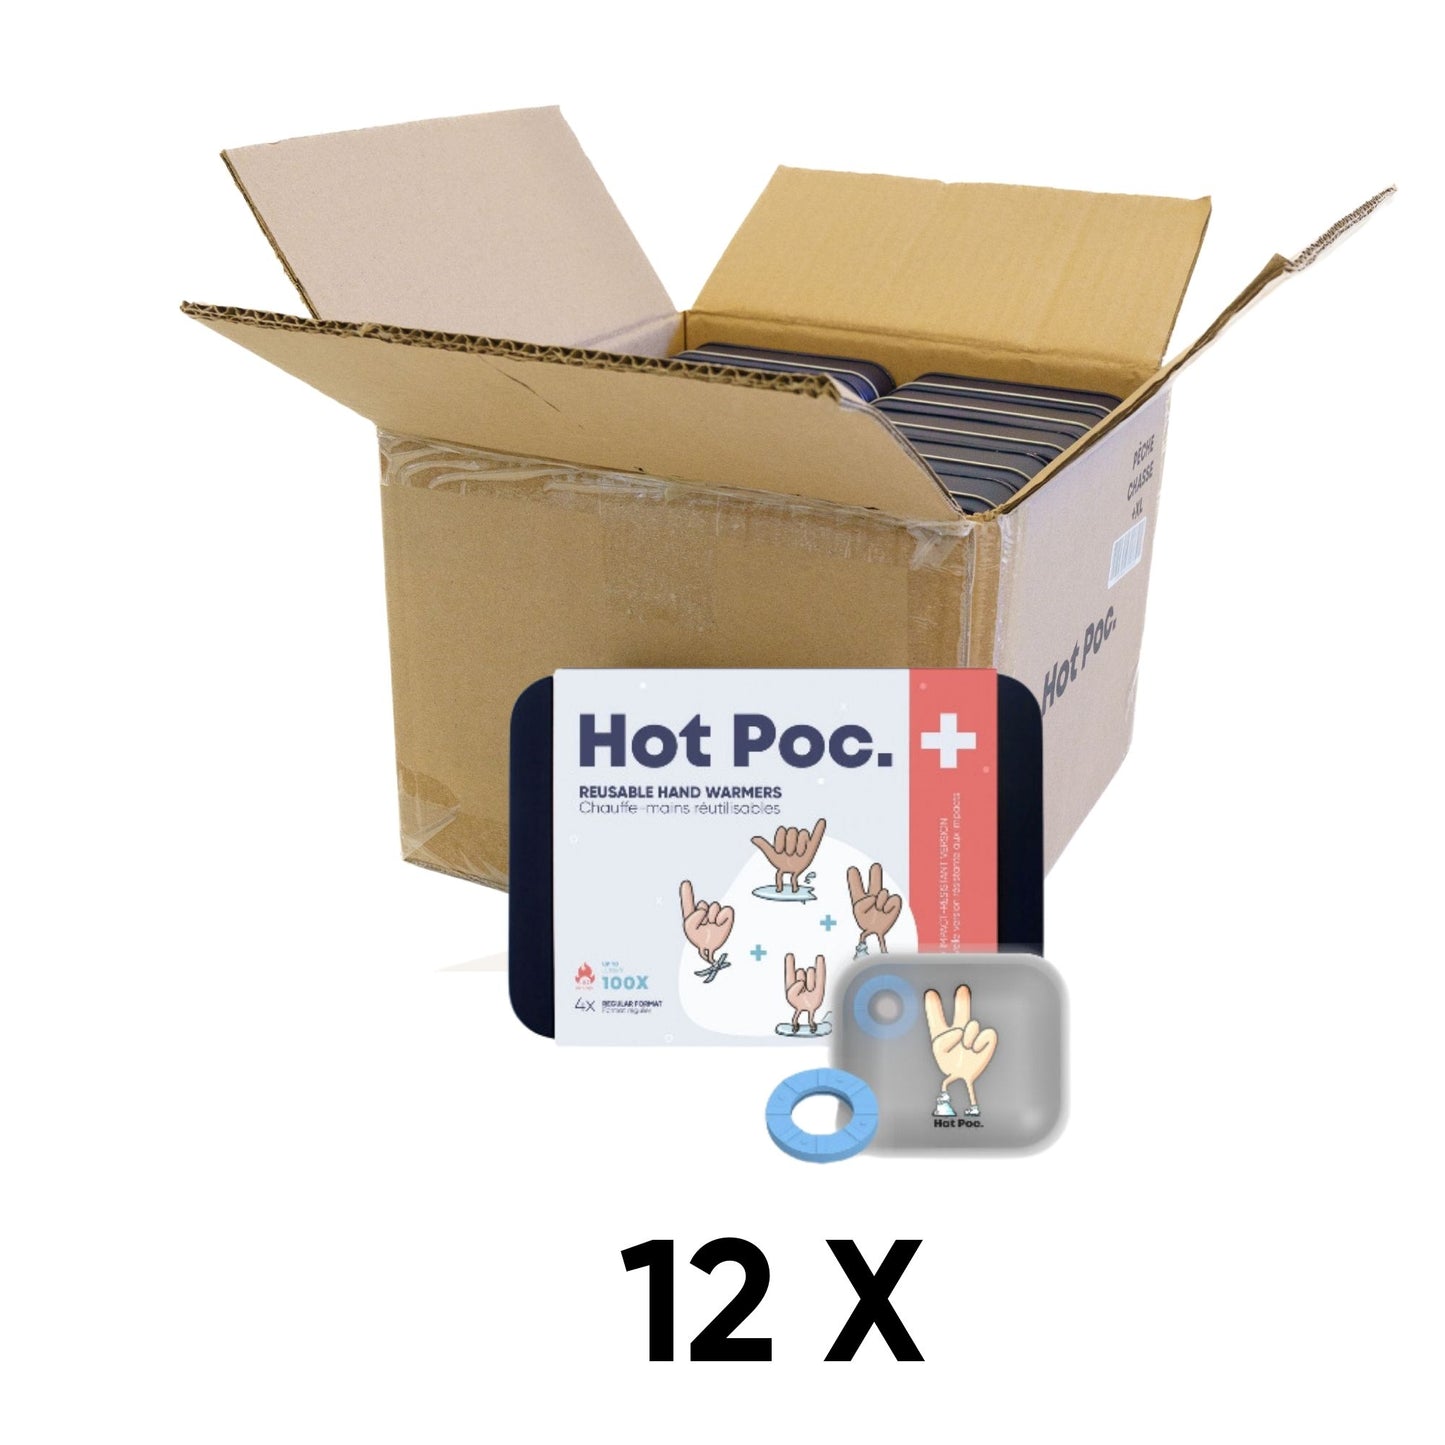 Box of 4 Hot Poc (4 regular PLUS) - Case of 12 boxes